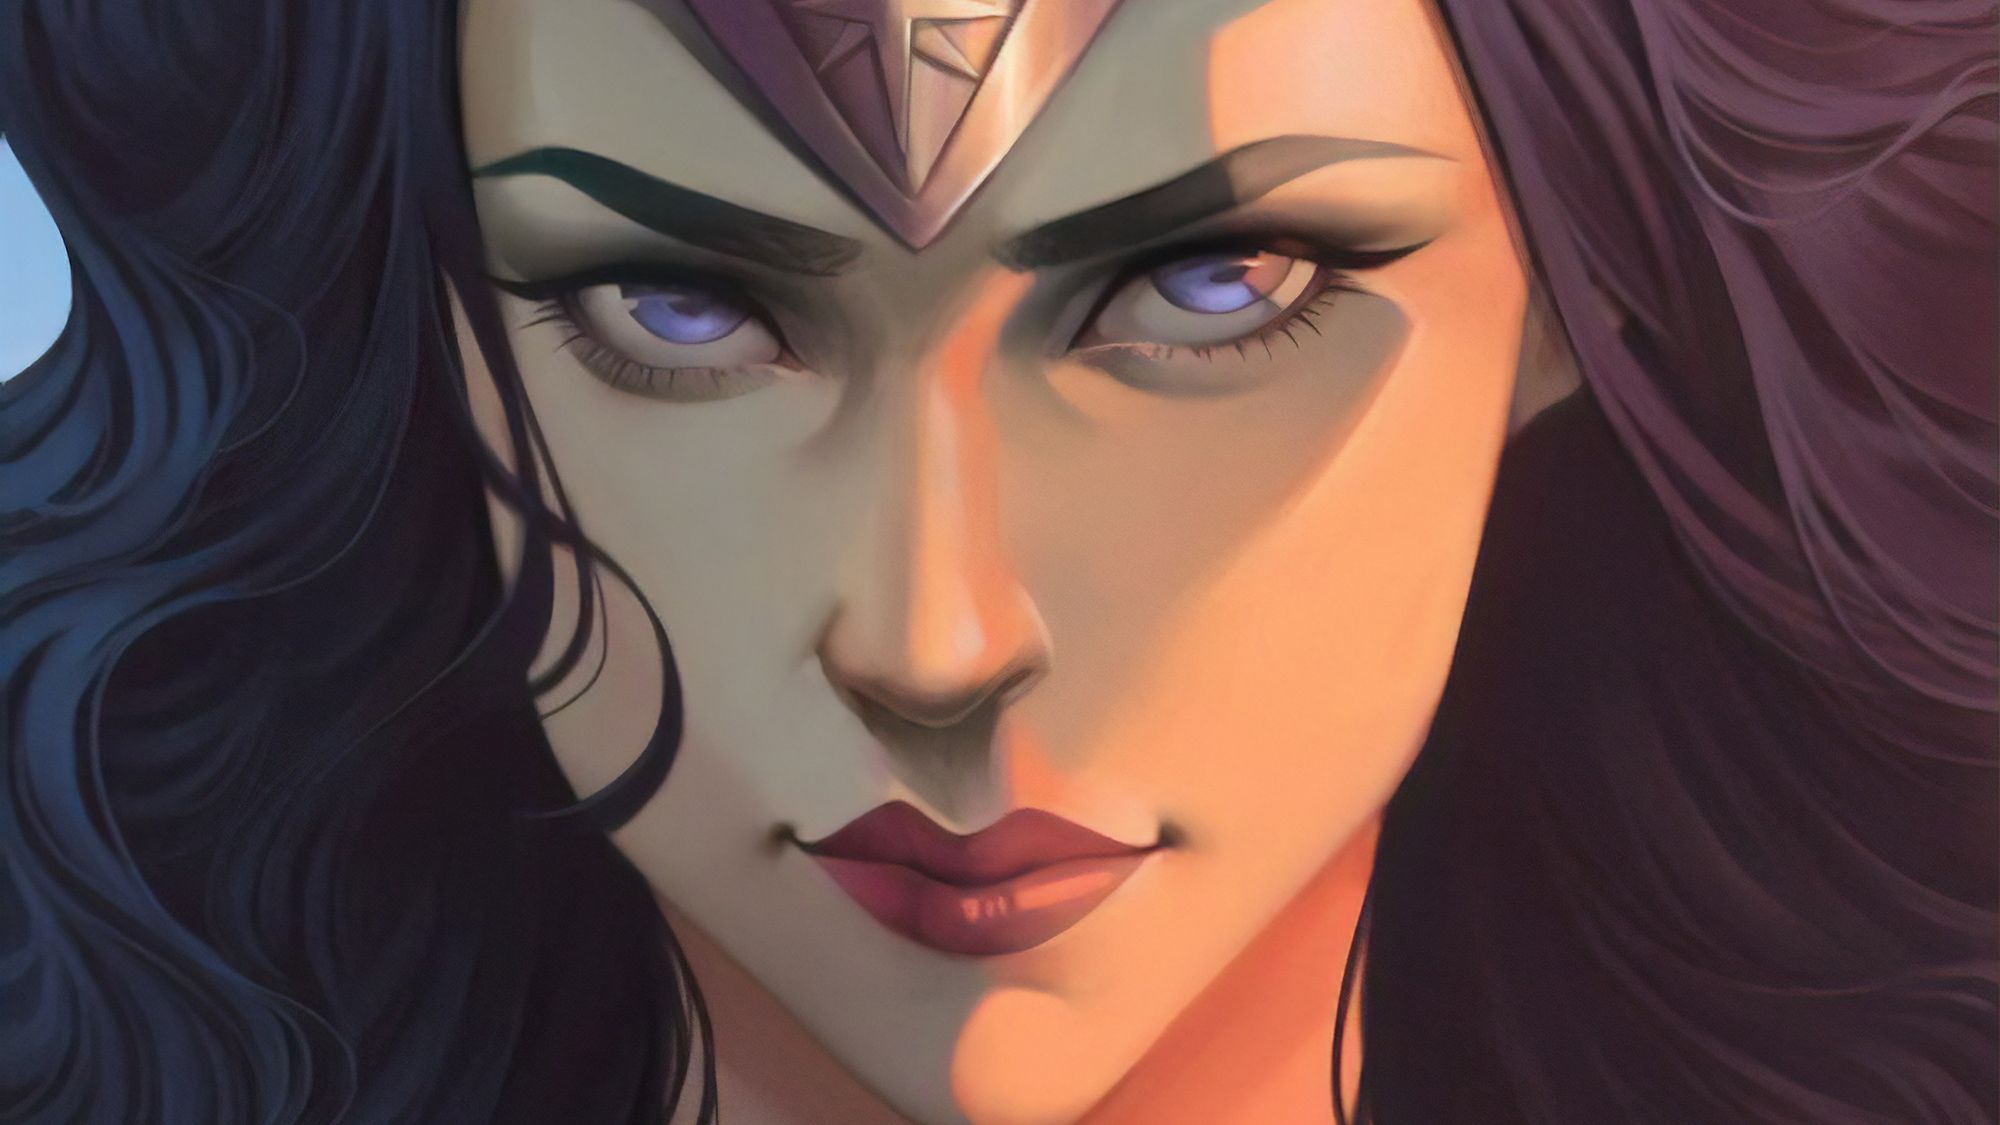 Wonder Woman Face Portrait, HD Superheroes, 4k Wallpaper, Image